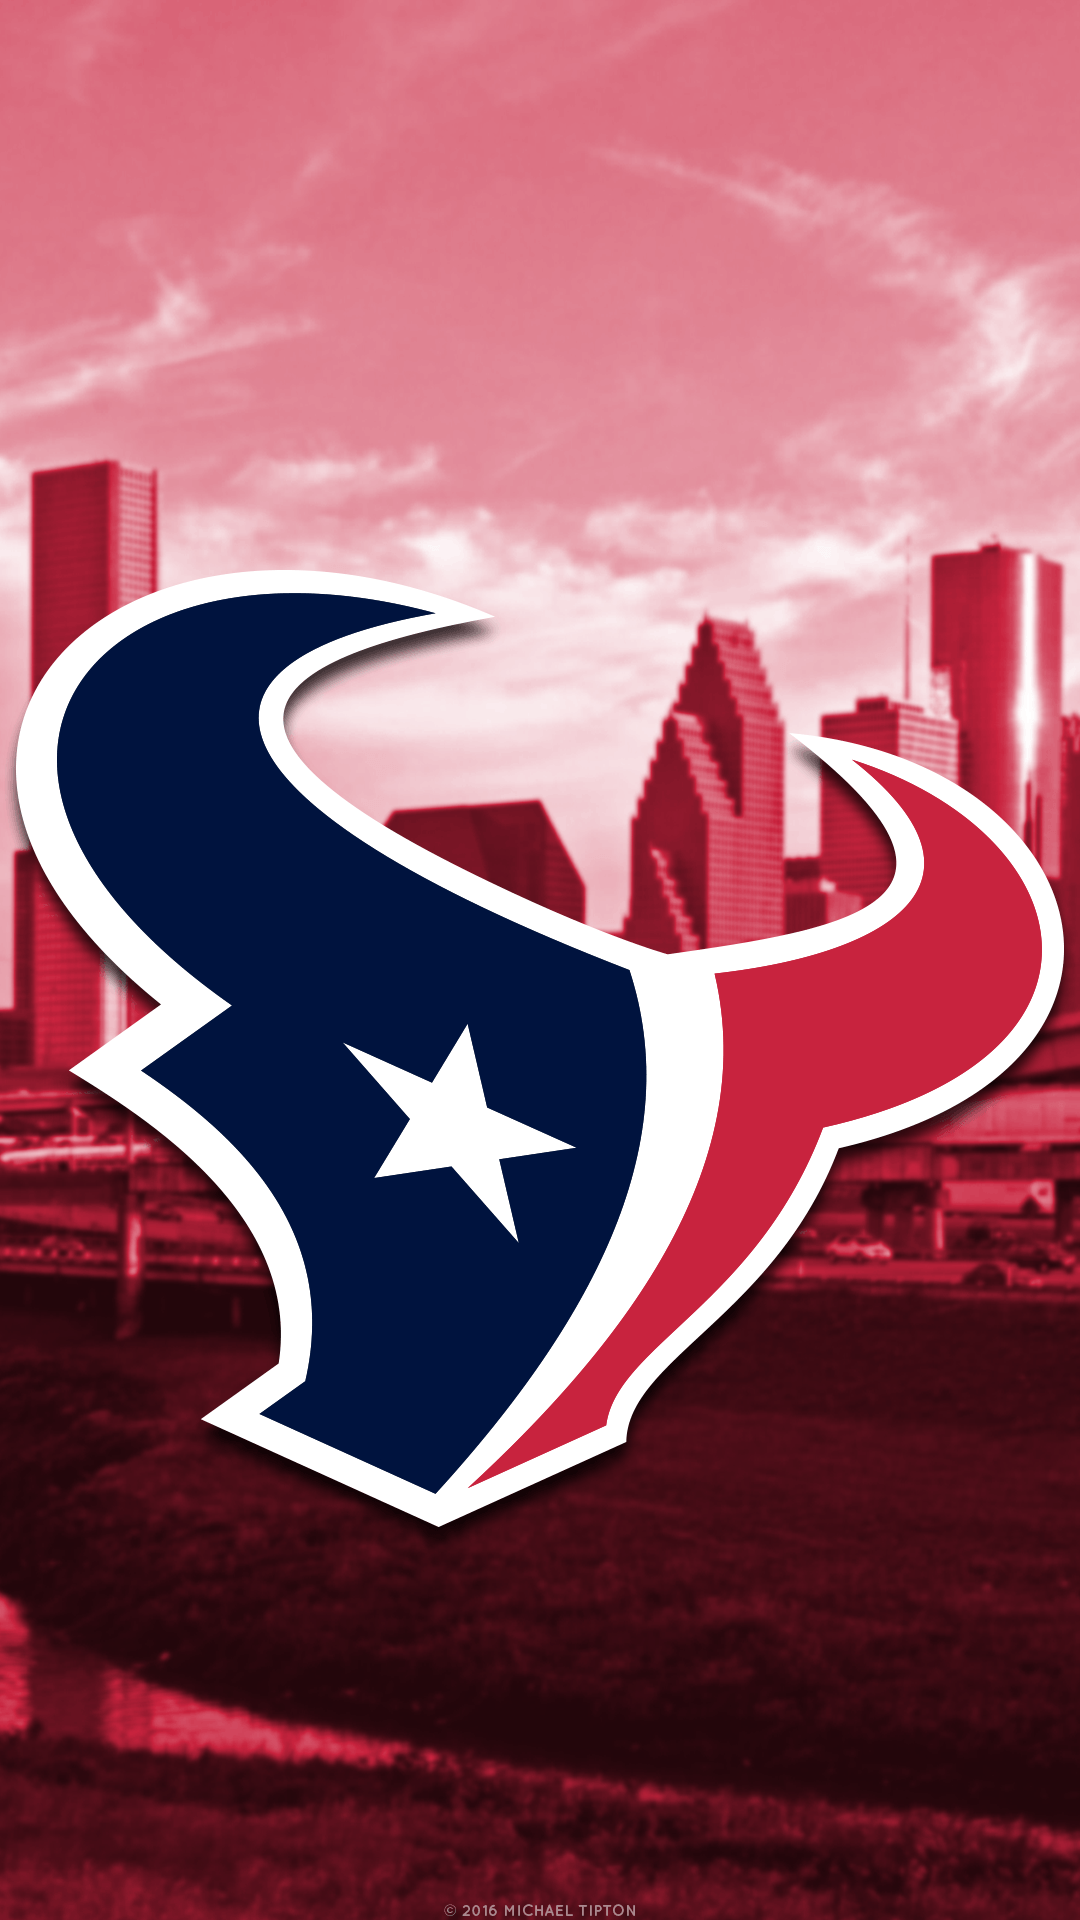 NFL Texans Logo - Houston Texans Wallpaper. iPhone. Android